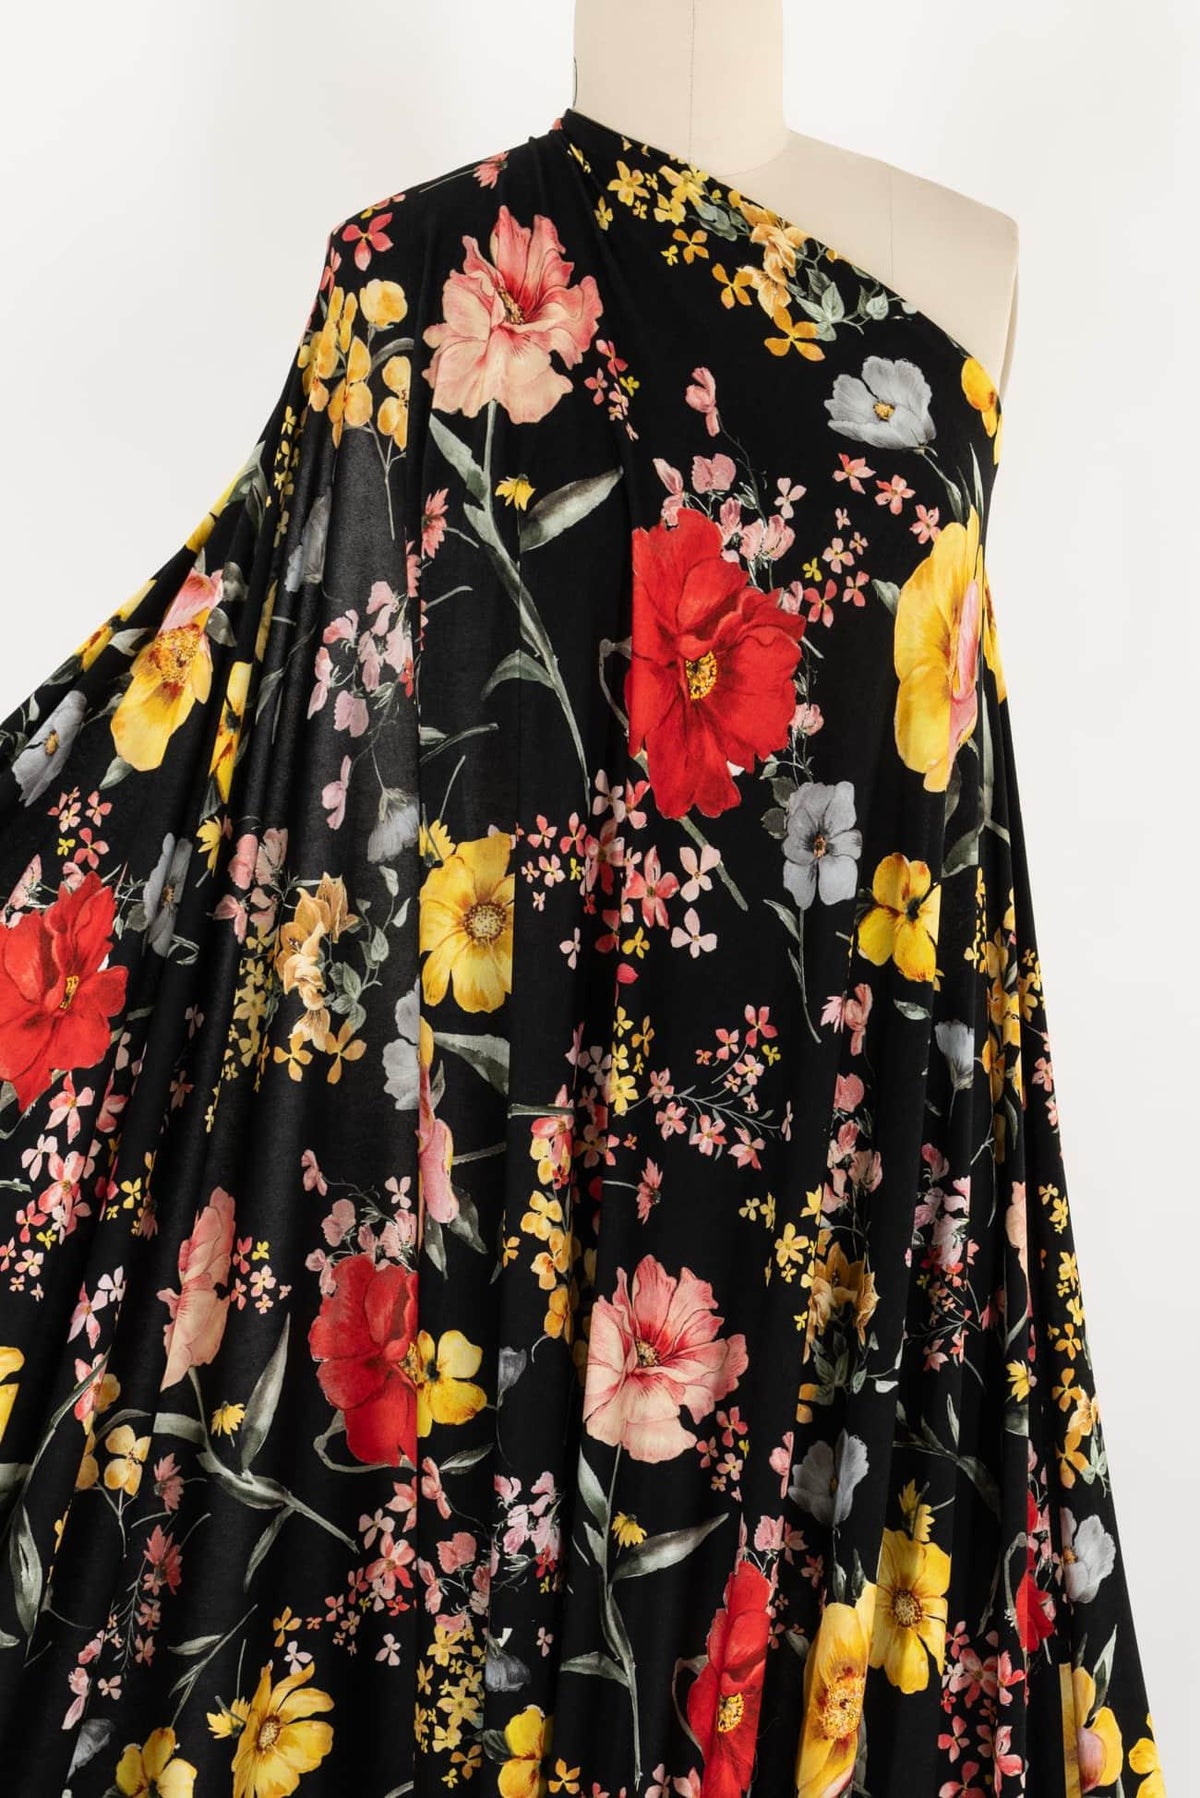 Fleur Italian Viscose Knit - Marcy Tilton Fabrics